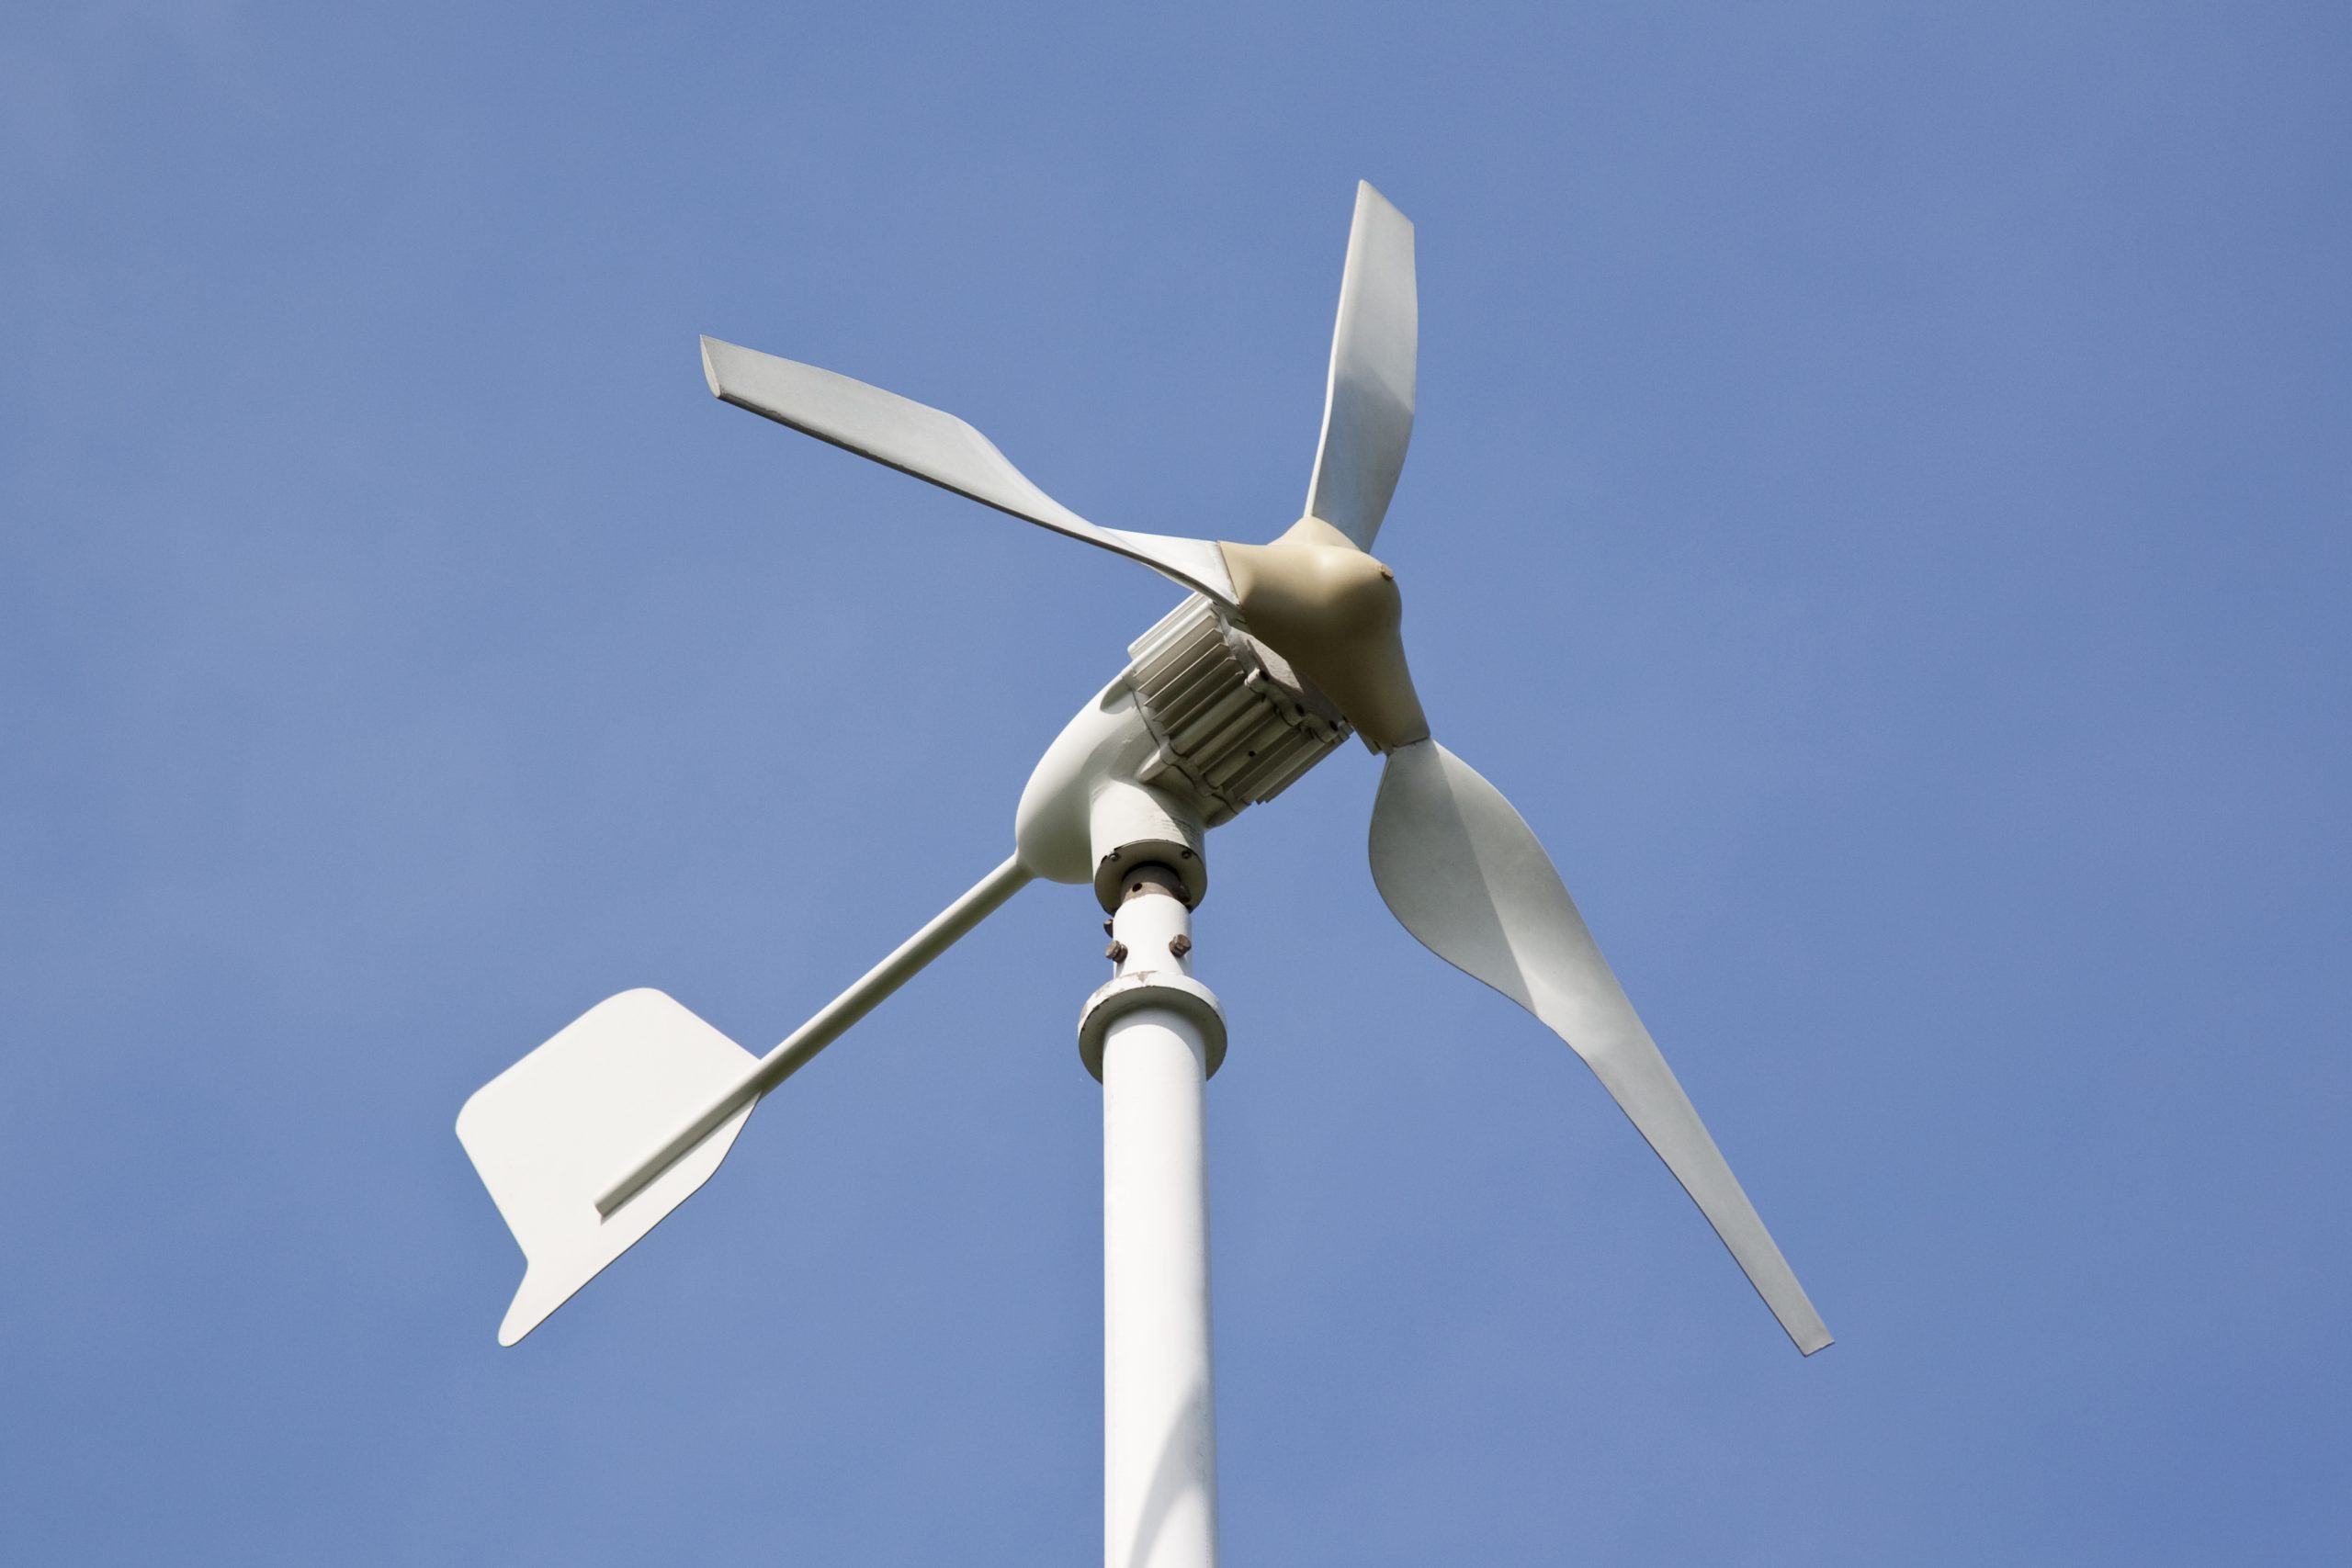 Small wind turbine against blue sky